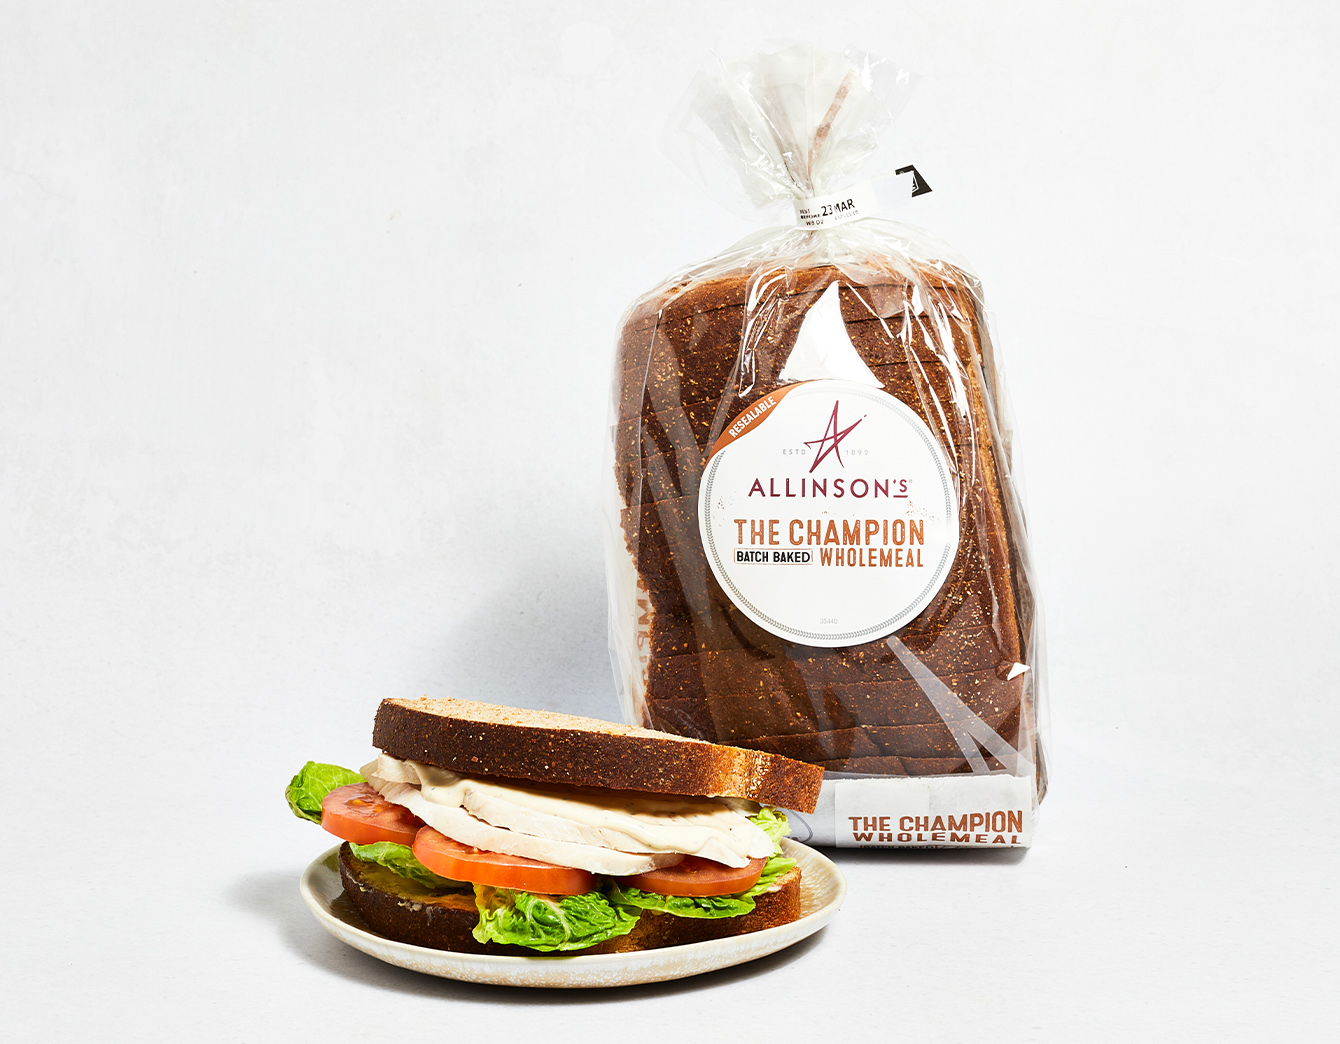 Allinson's Champion Wholemeal bread